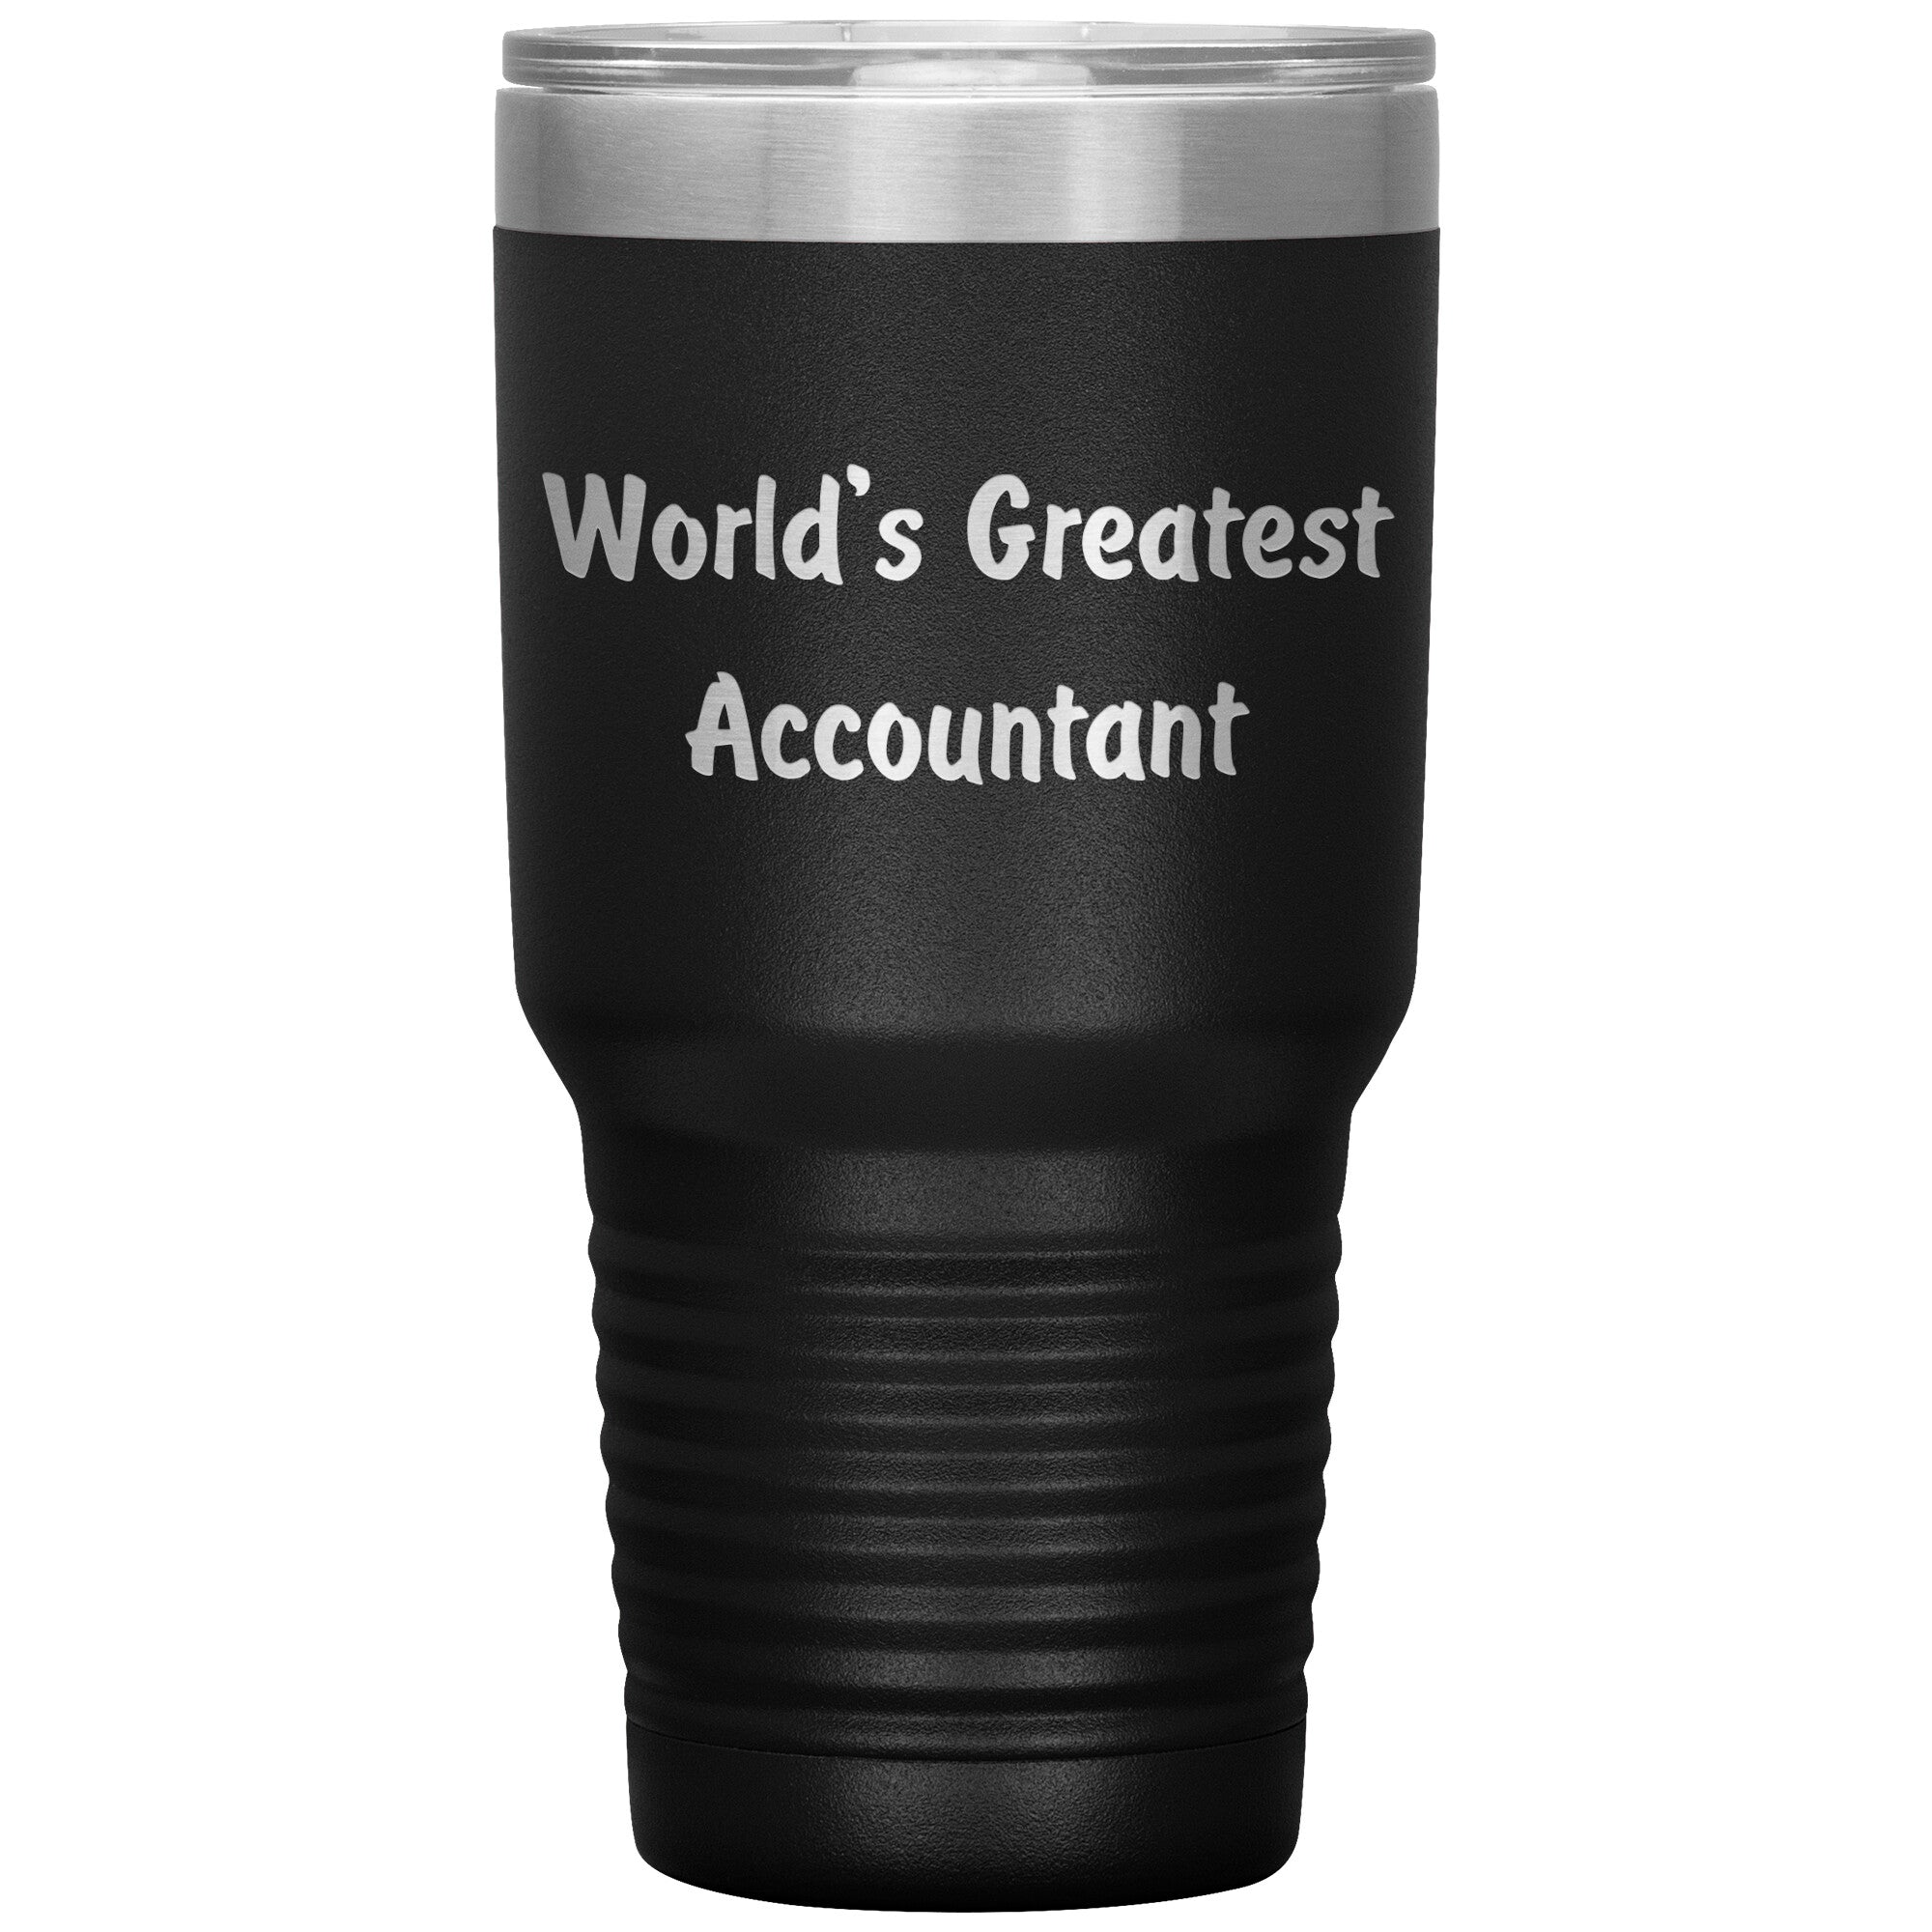 World's Greatest Accountant - 30oz Insulated Tumbler